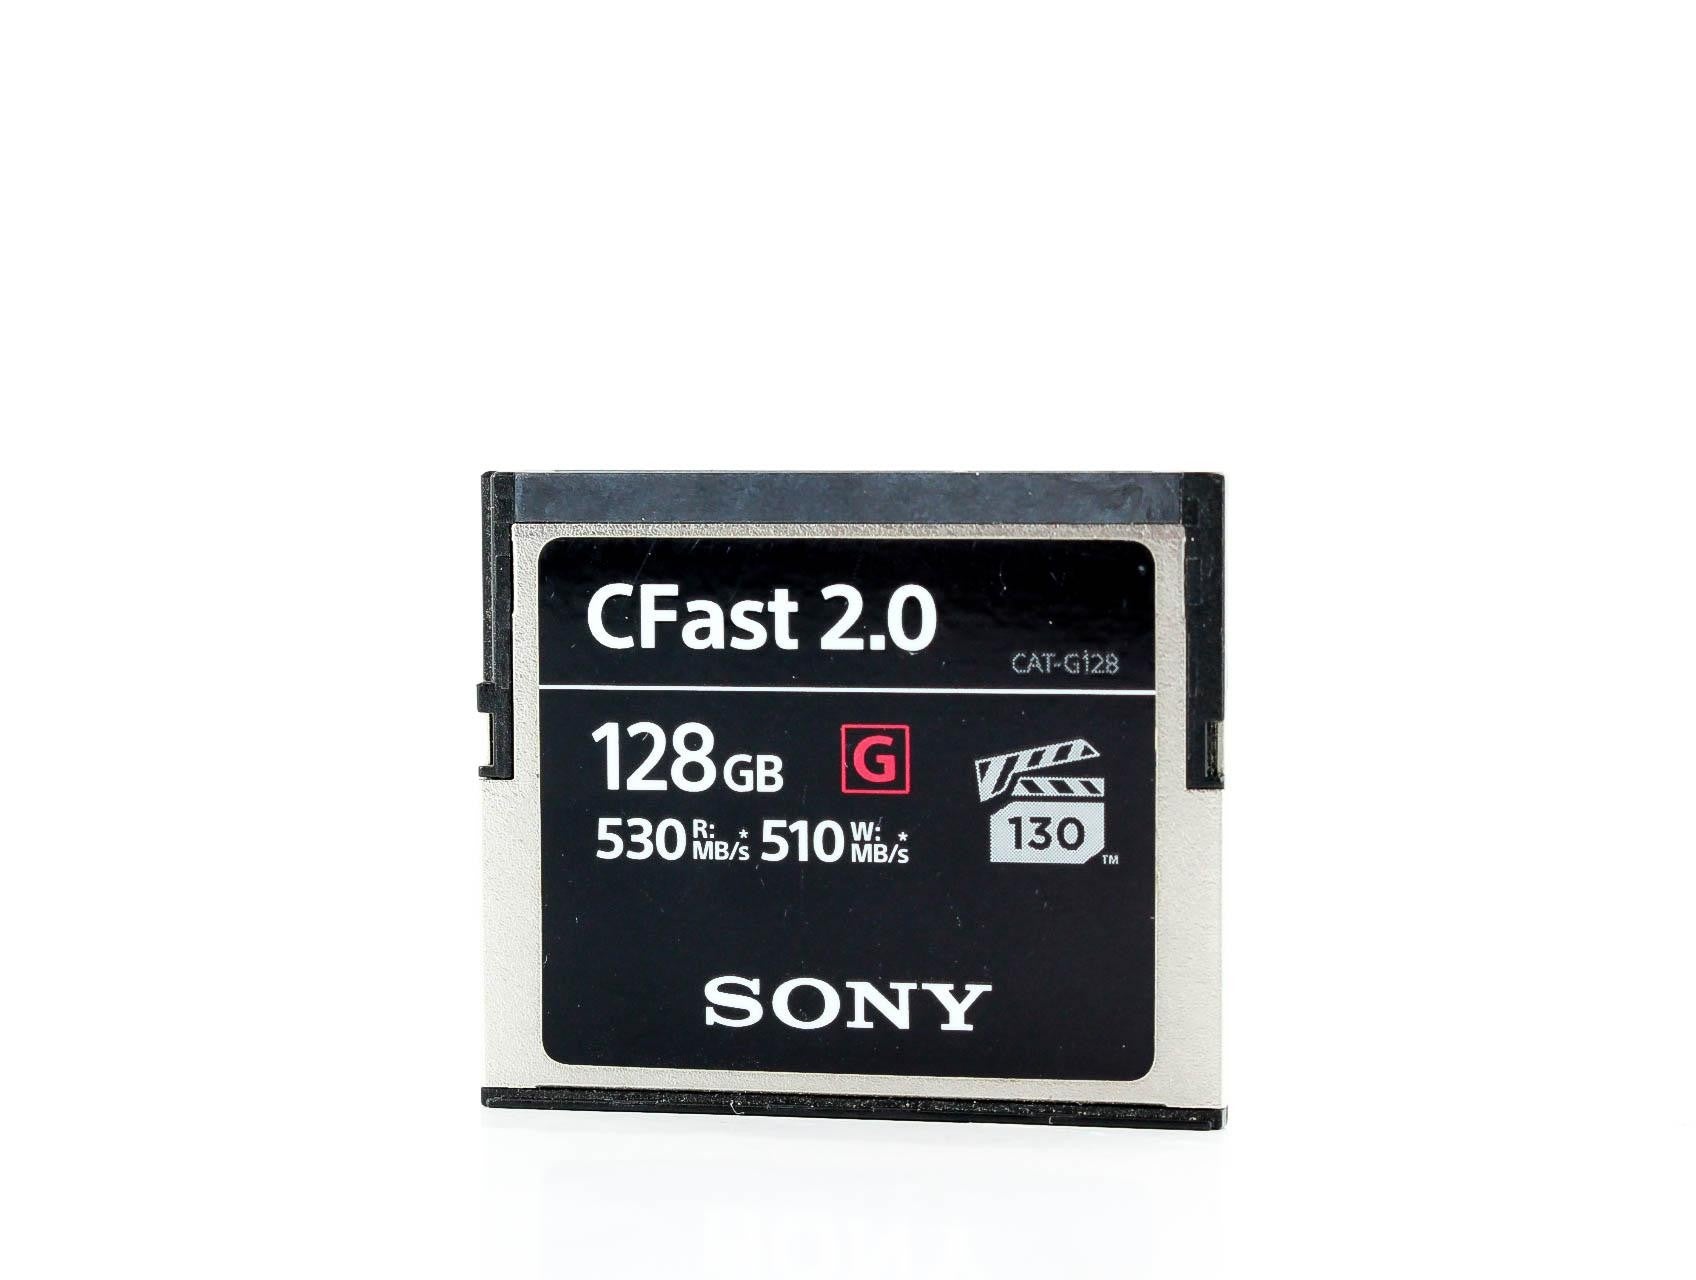 Sony CAT-G128 128GB CFast 2.0 G Series 530mb/s